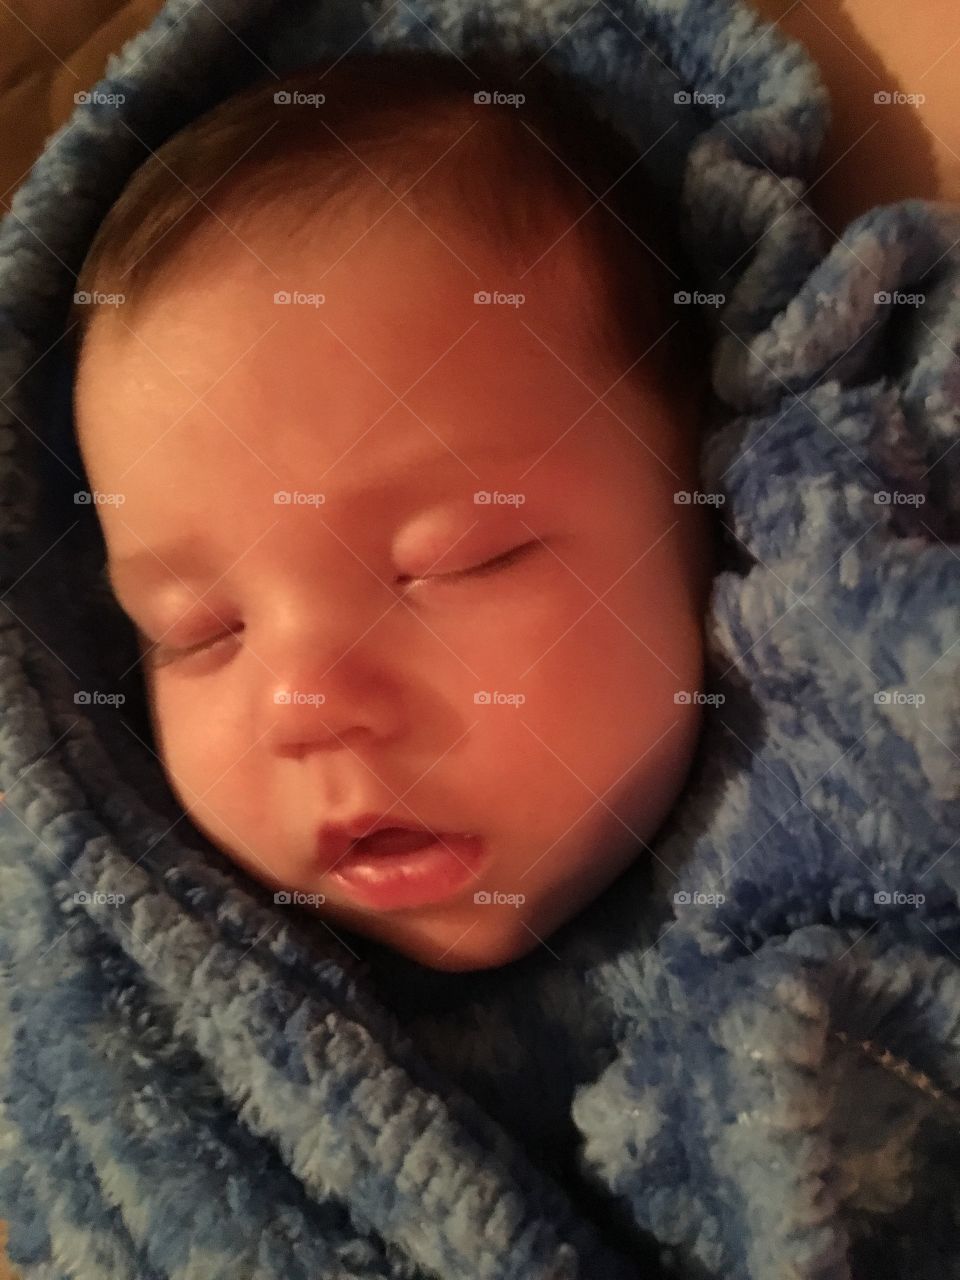 My gorgeous grandson sleeping 